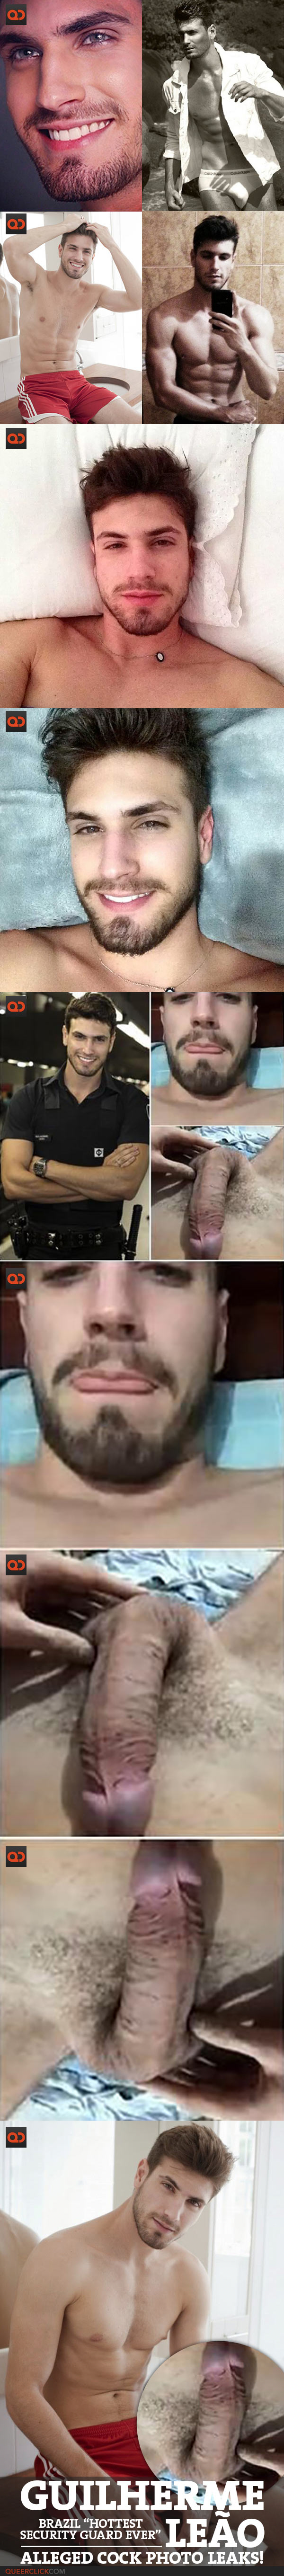 Guilherme Leão, Brazil's “Hottest Security Guard Ever”, Alleged Cock Photo Leaks!